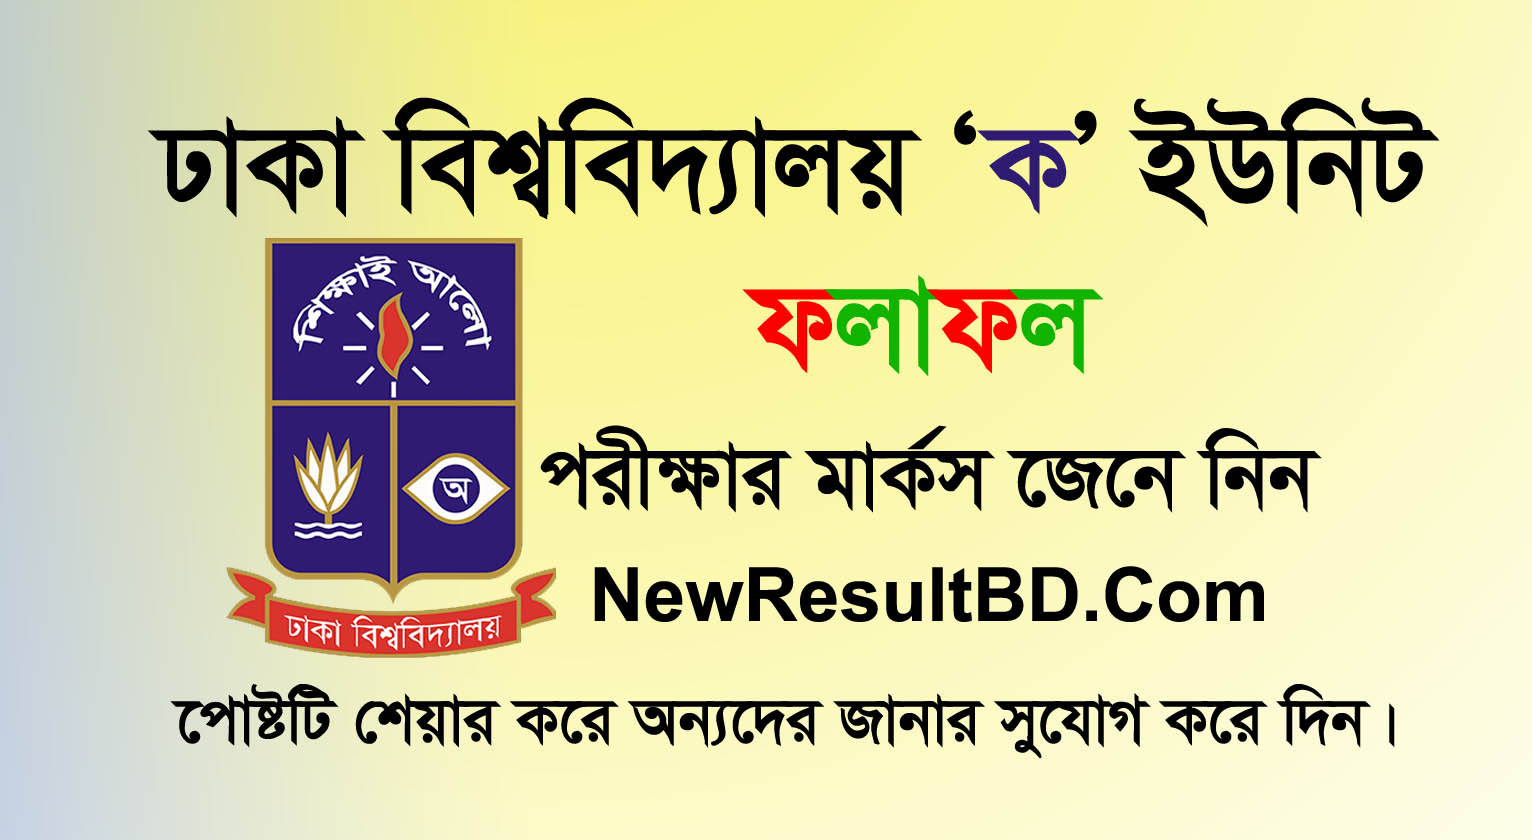 Dhaka University A Unit Result 2021, DU A Unit Exam Result, KA Unit Folafol, Dhaka Varsity A / KA / Science Unit Admission Result 21-21. DU A Result 2021.